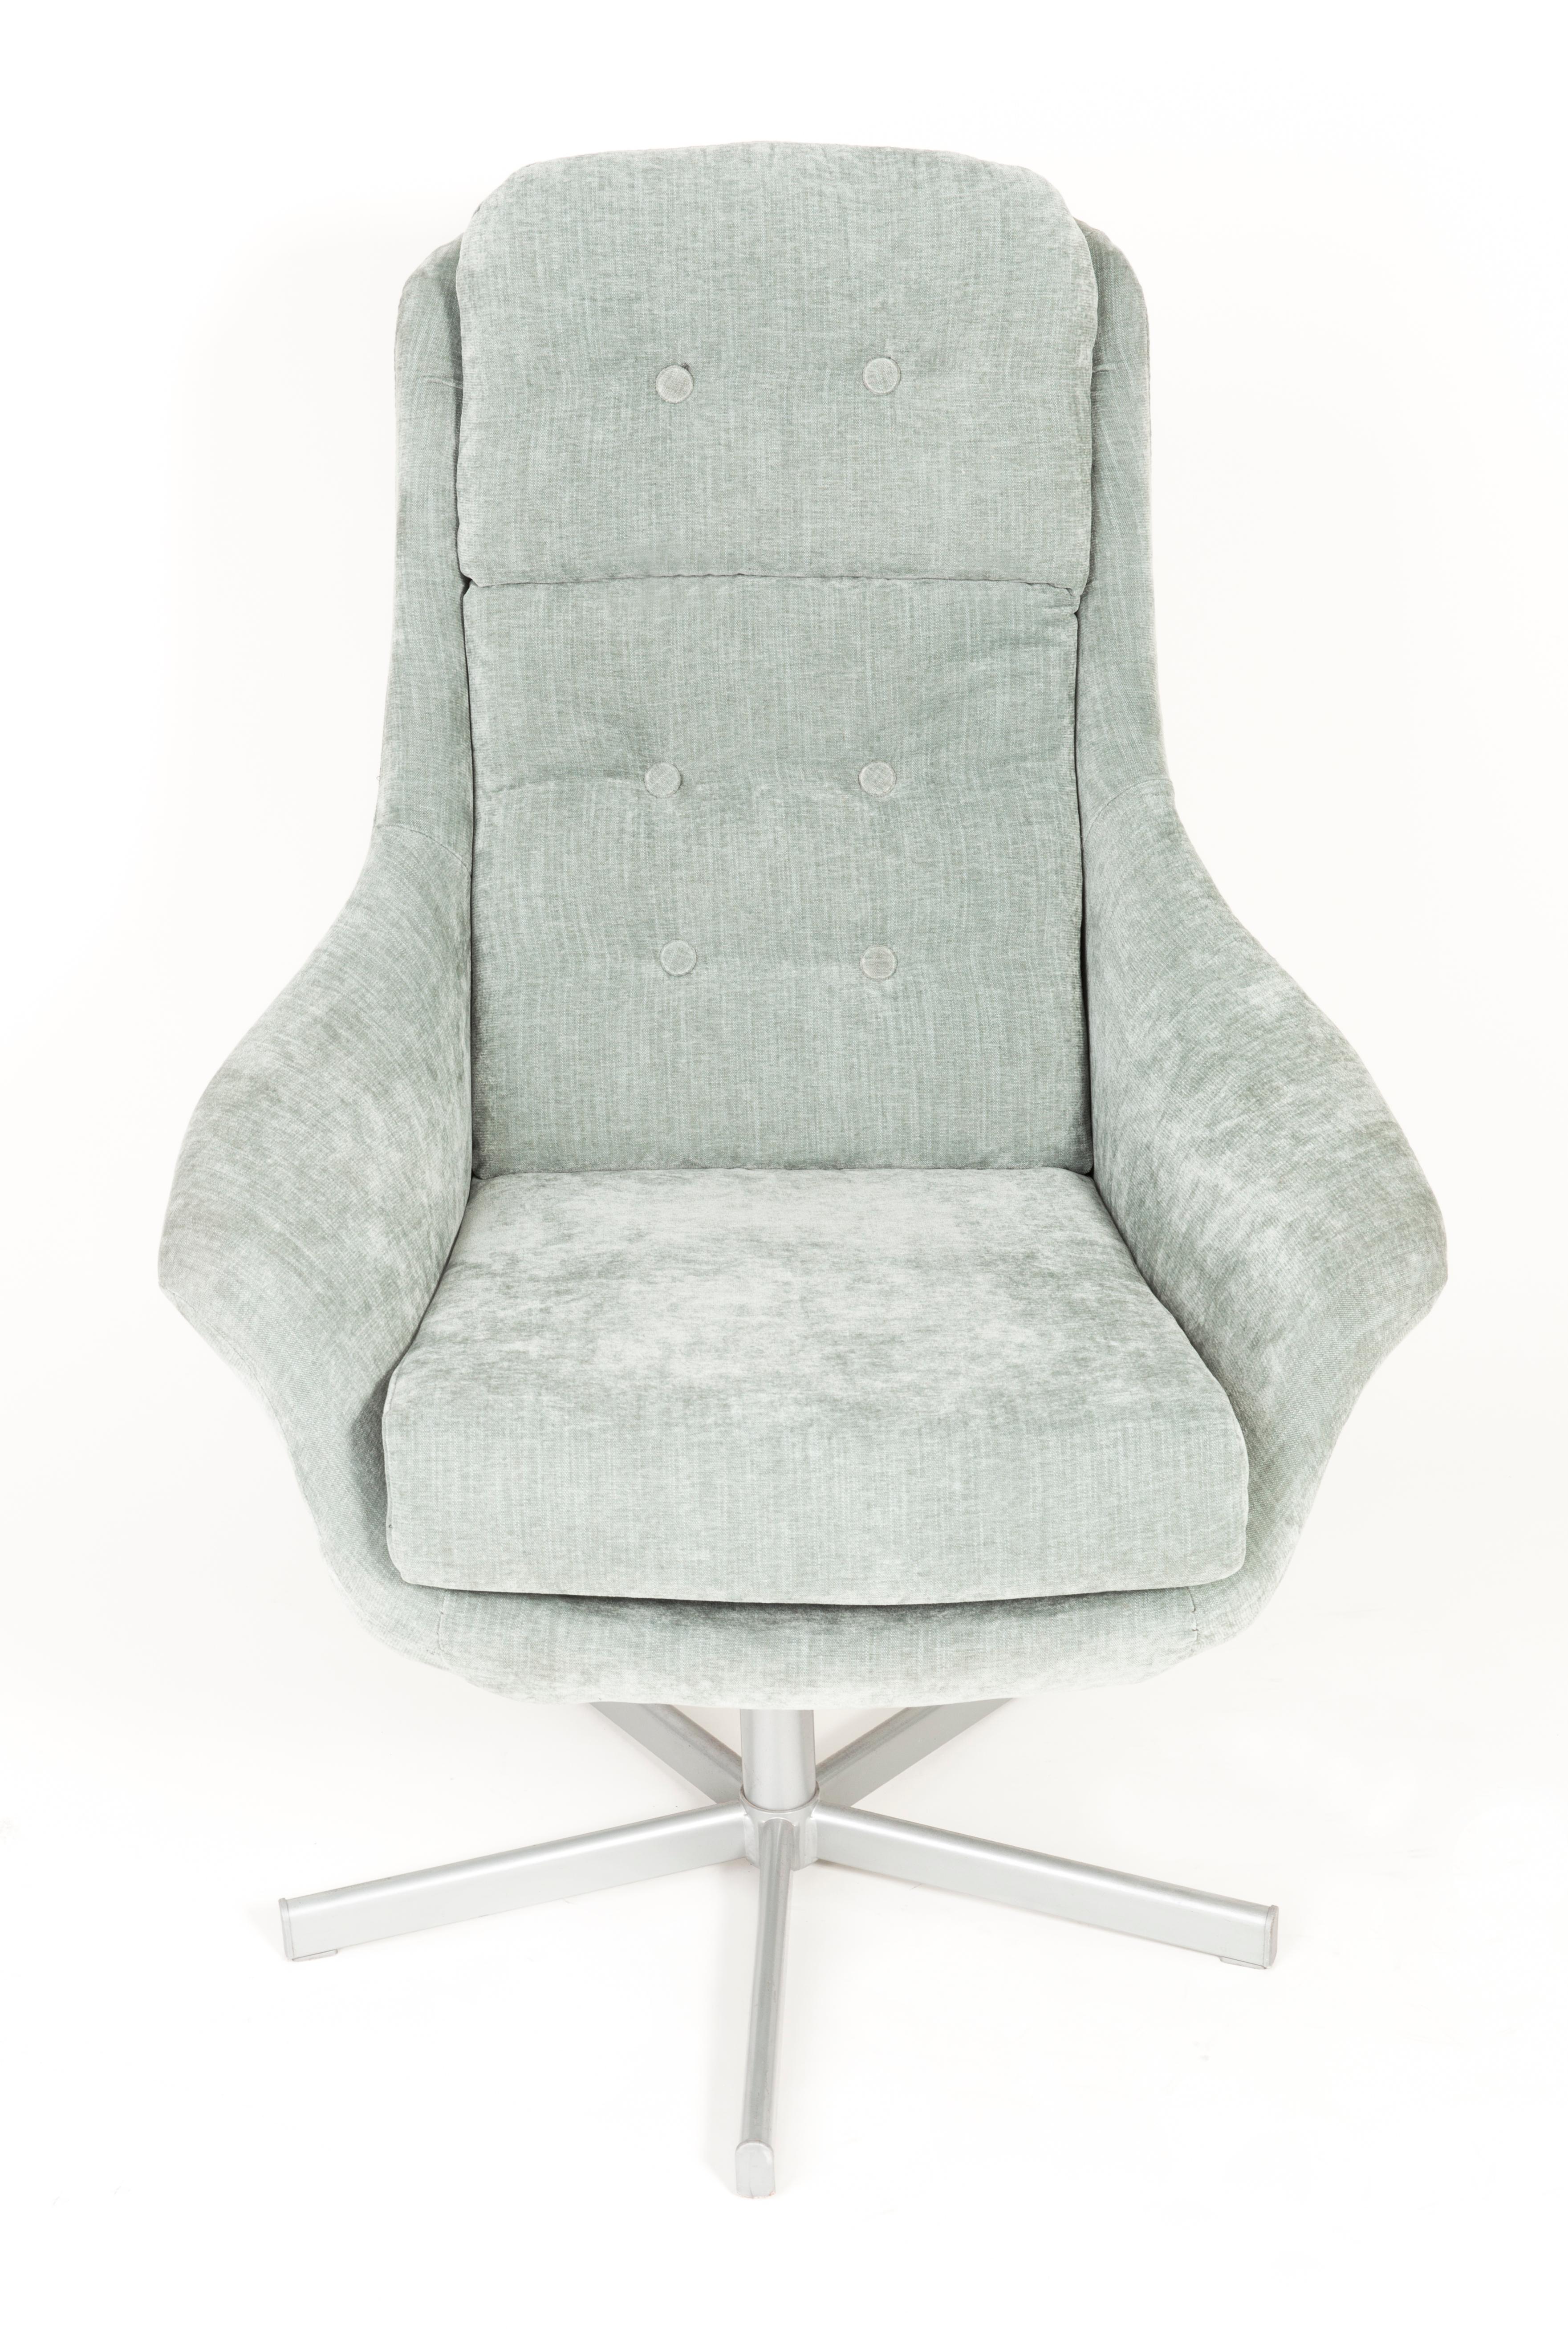 Hellgrüner drehbarer Sessel des 20. Jahrhunderts, 1960er Jahre (Handgefertigt) im Angebot